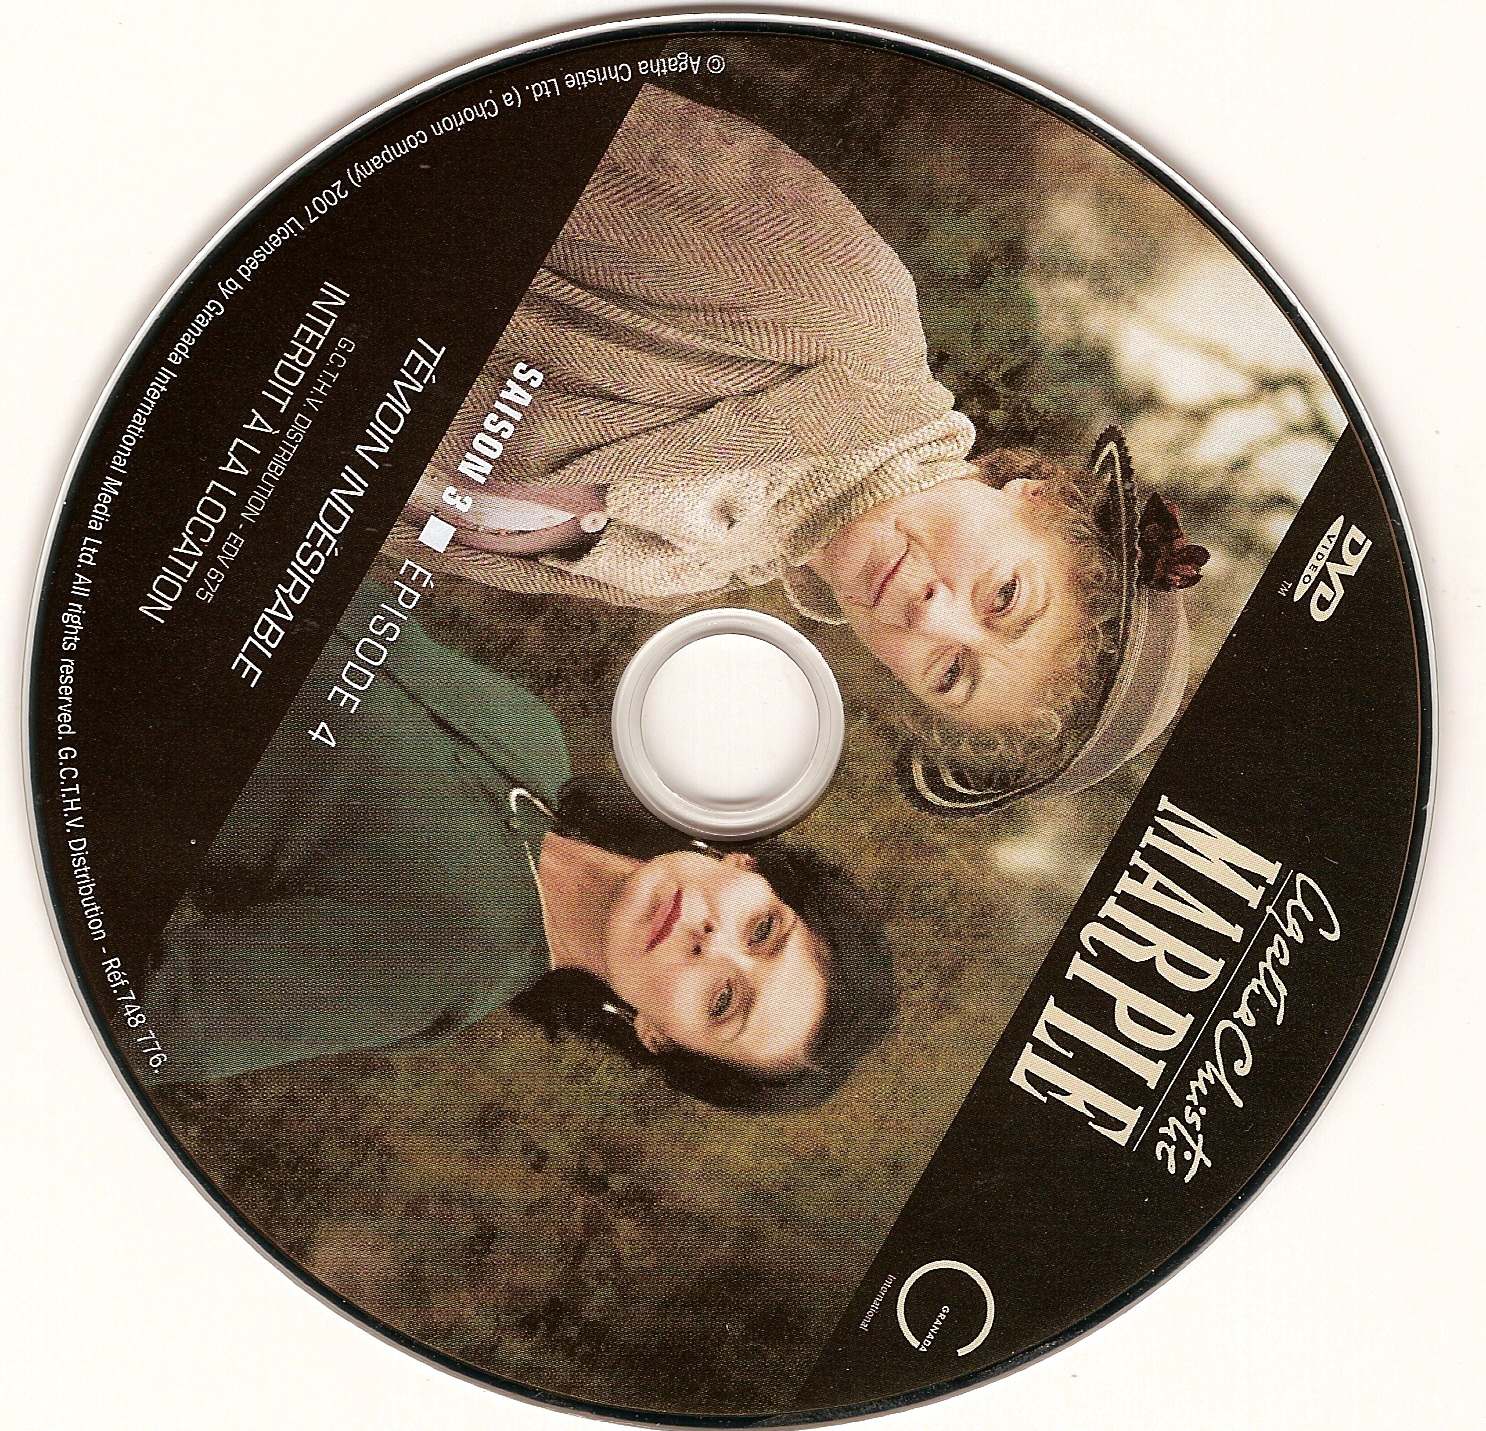 Miss Marple Saison 3 DVD 4